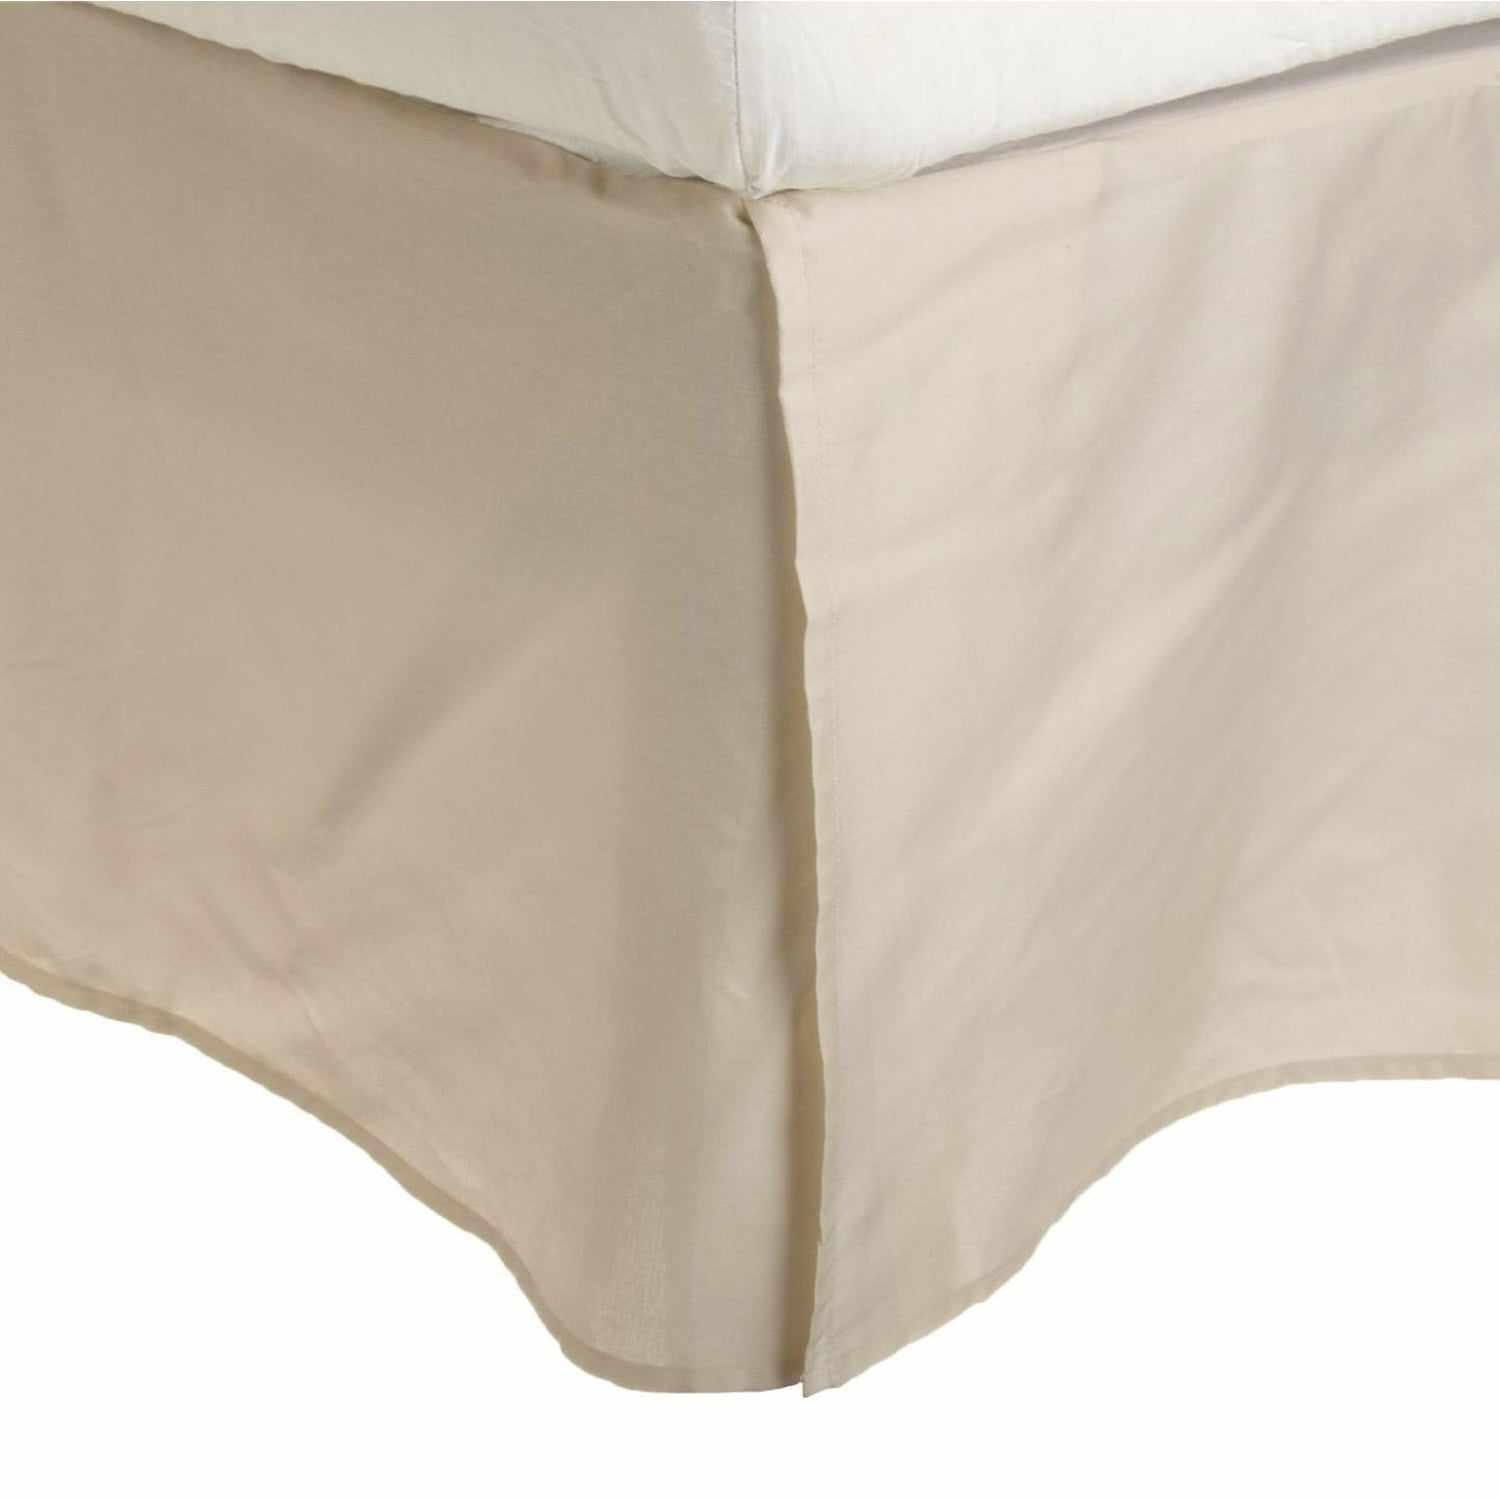  Solid Microfiber Wrinkle Free 15 Inch Drop Bed Skirt - Ivory